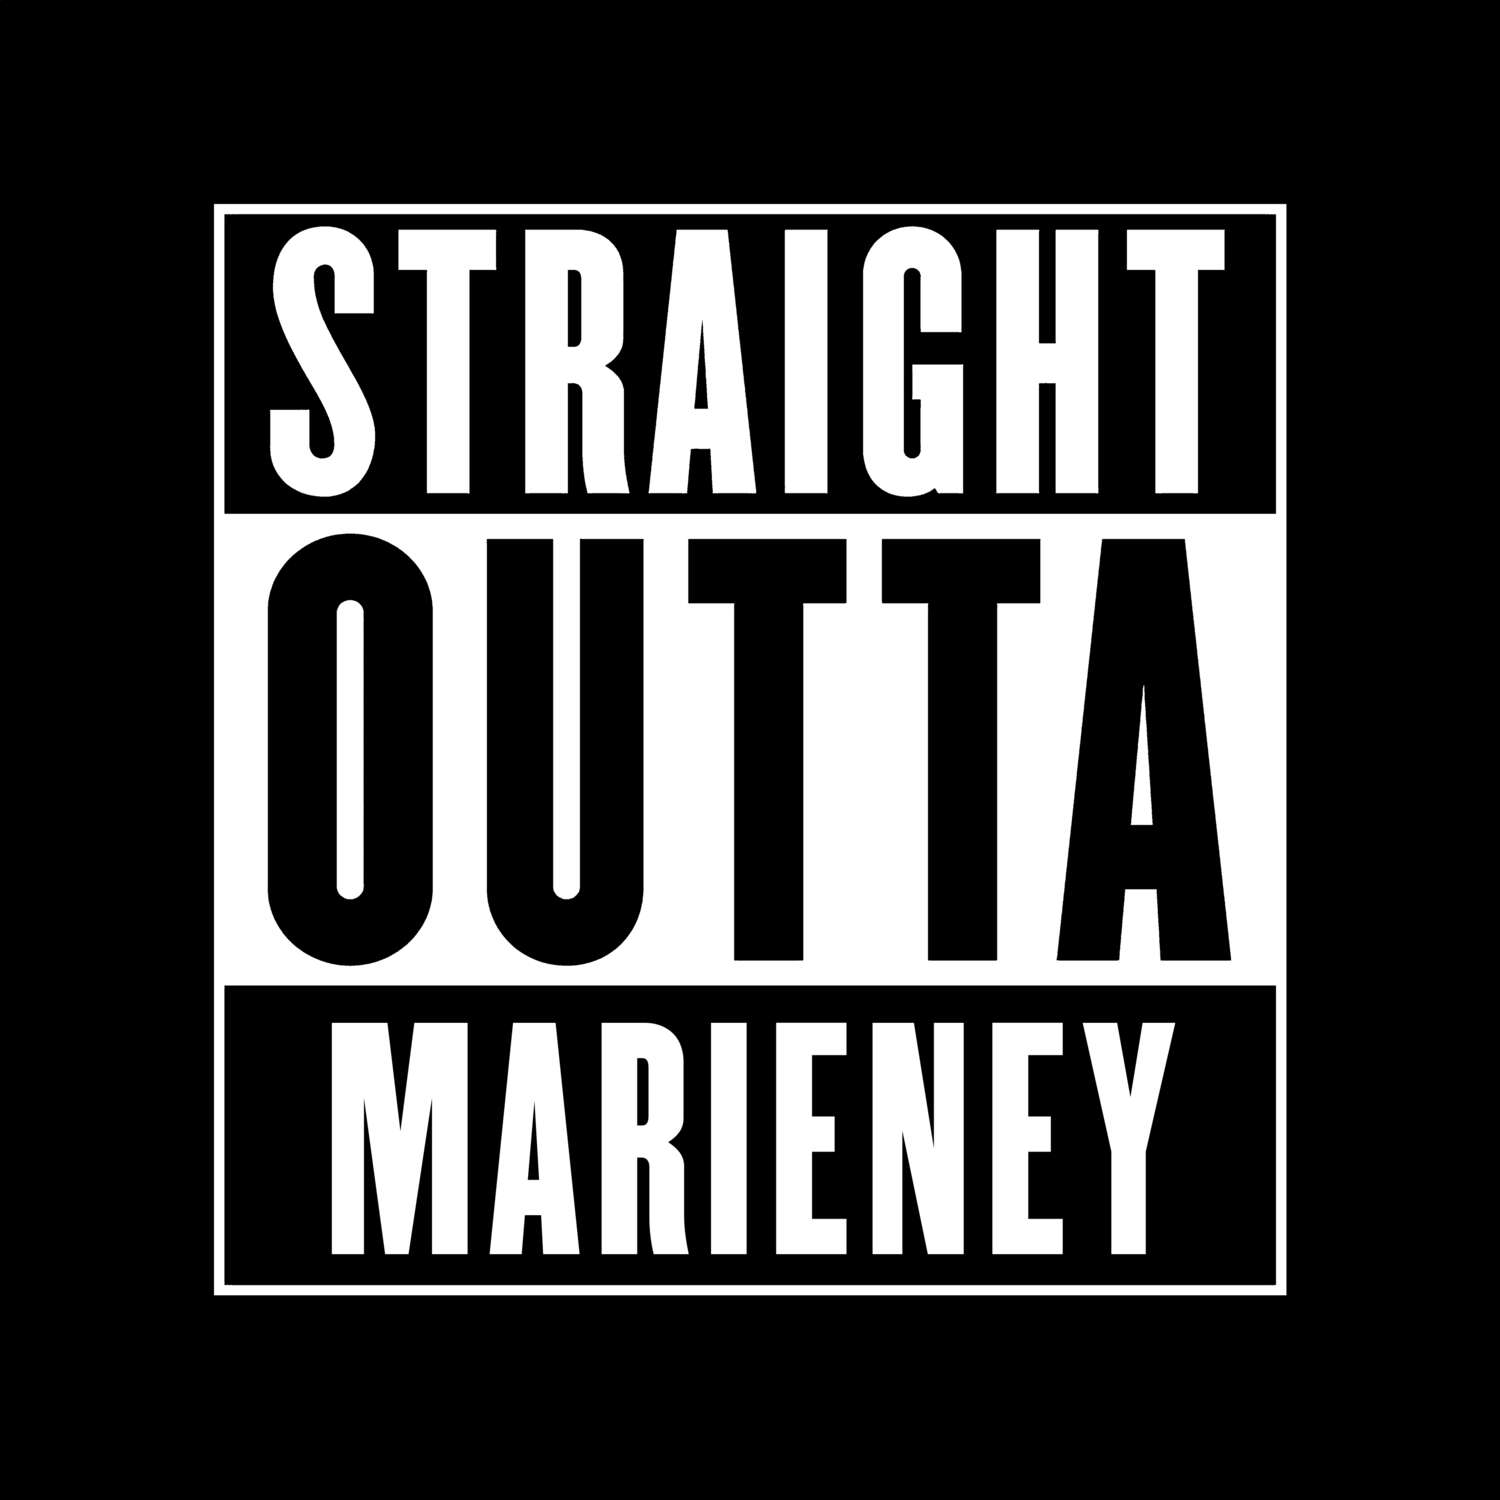 Marieney T-Shirt »Straight Outta«